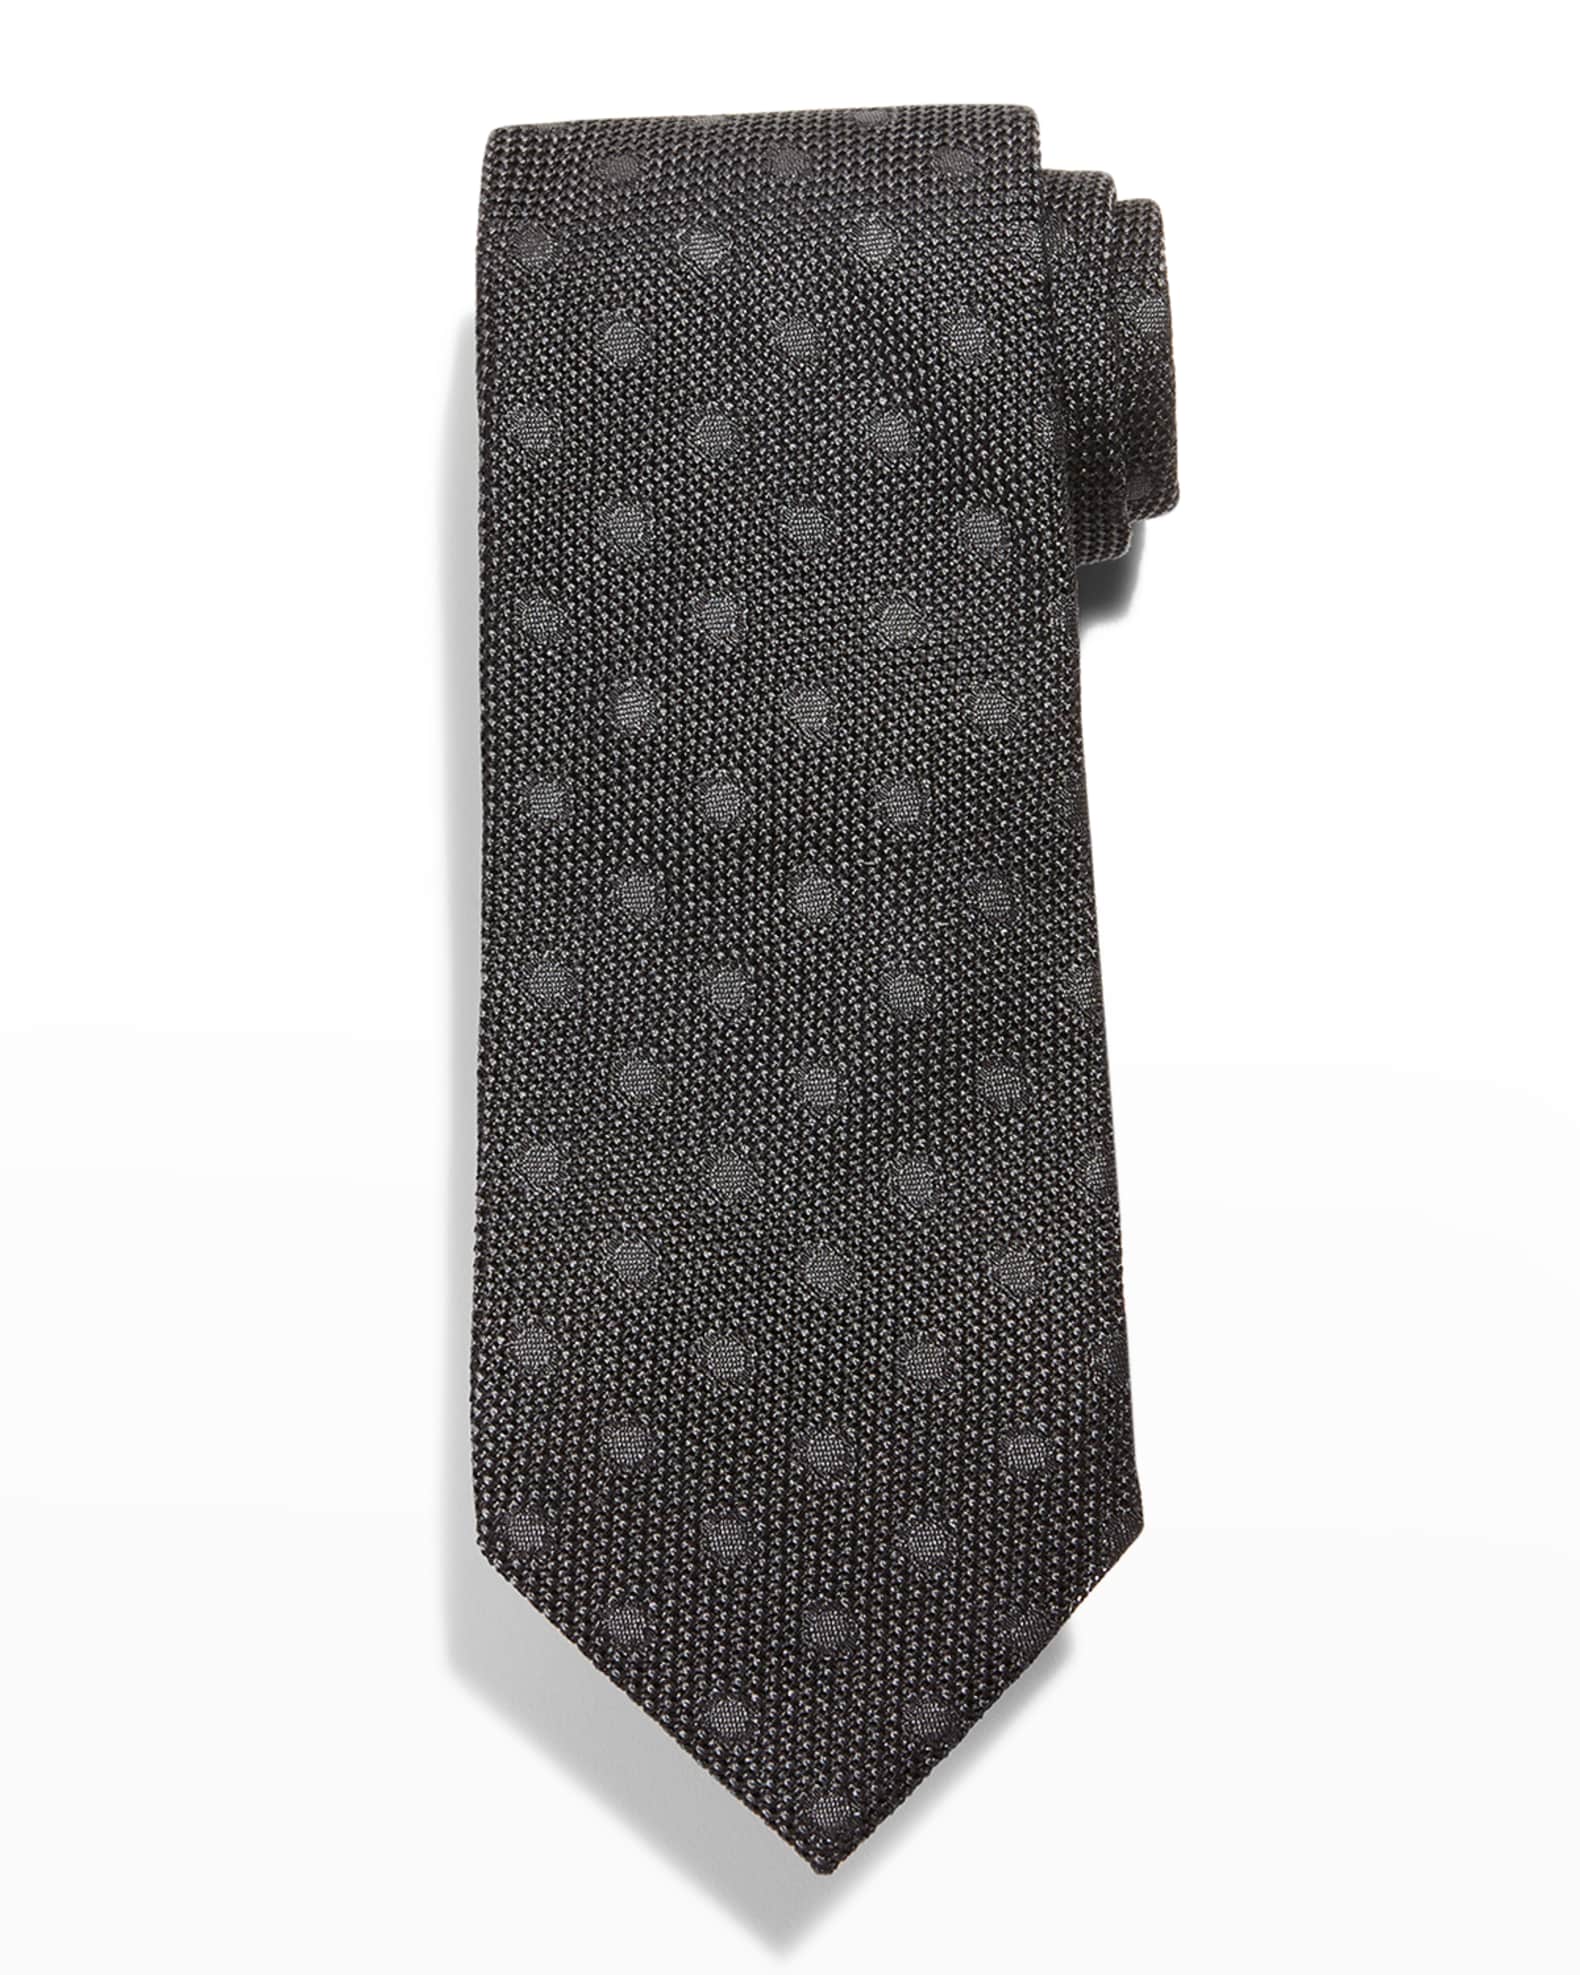 neimanmarcus.com | Men's Jacquard Dot Silk Tie